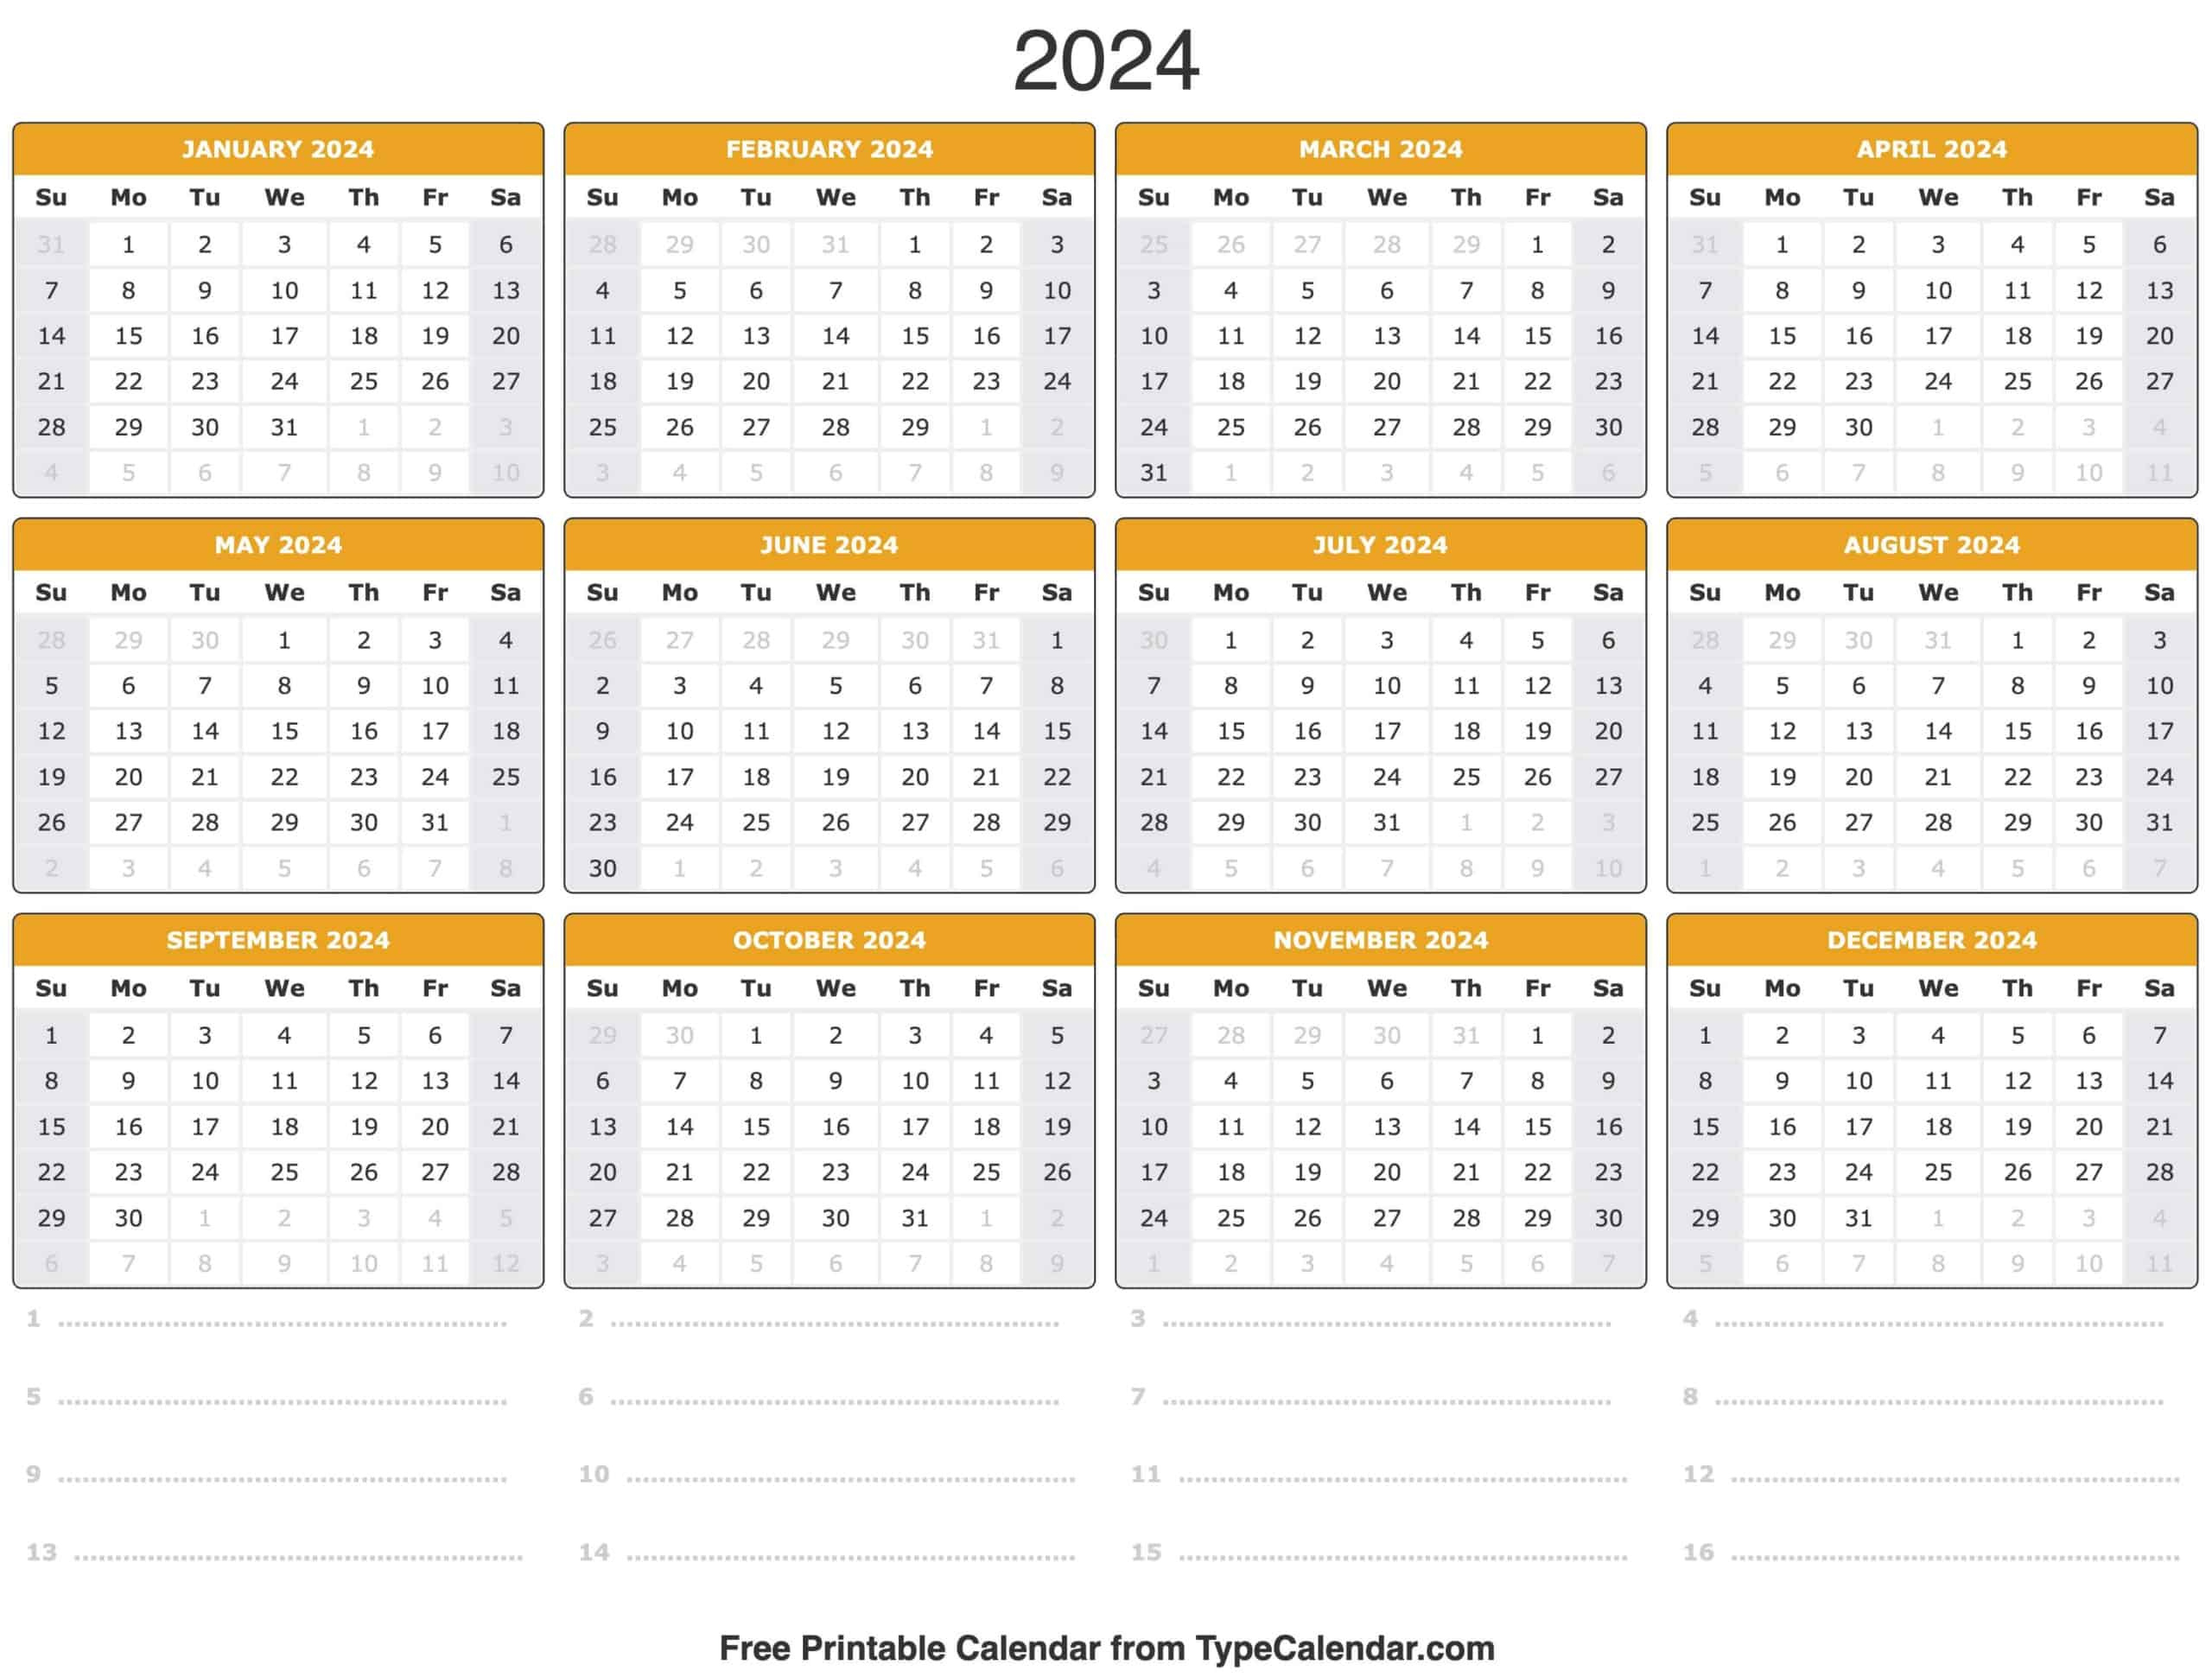 2024 Calendar: Free Printable Calendar With Holidays intended for 2024 Julian Calendar With Holidays